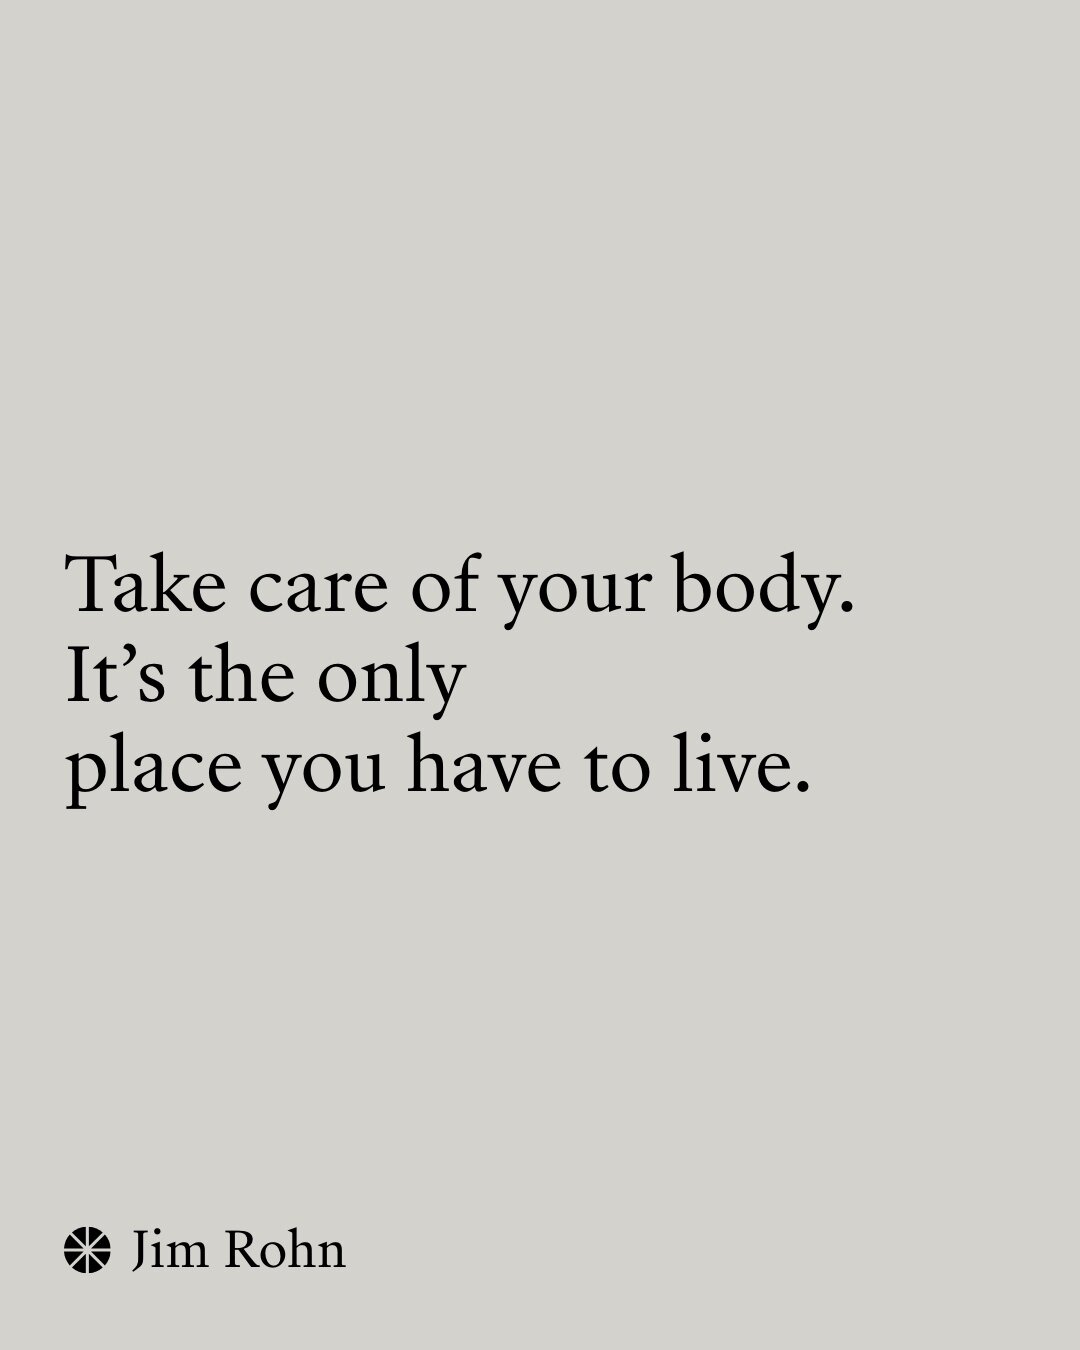 ⁠
Yoga is not just having a beautiful body.⁠
Jiddu Krishnamurti⁠
⁠
Yoga is so much more....⁠
⁠
#deardoris ⁠
#healthybody⁠
#healthymind⁠
#healthybodyhealthymind⁠
#holisticliving⁠
#balancedlife ⁠
#designyourlife⁠
#mindbodysoul⁠
#mentalwellbeing ⁠
#self